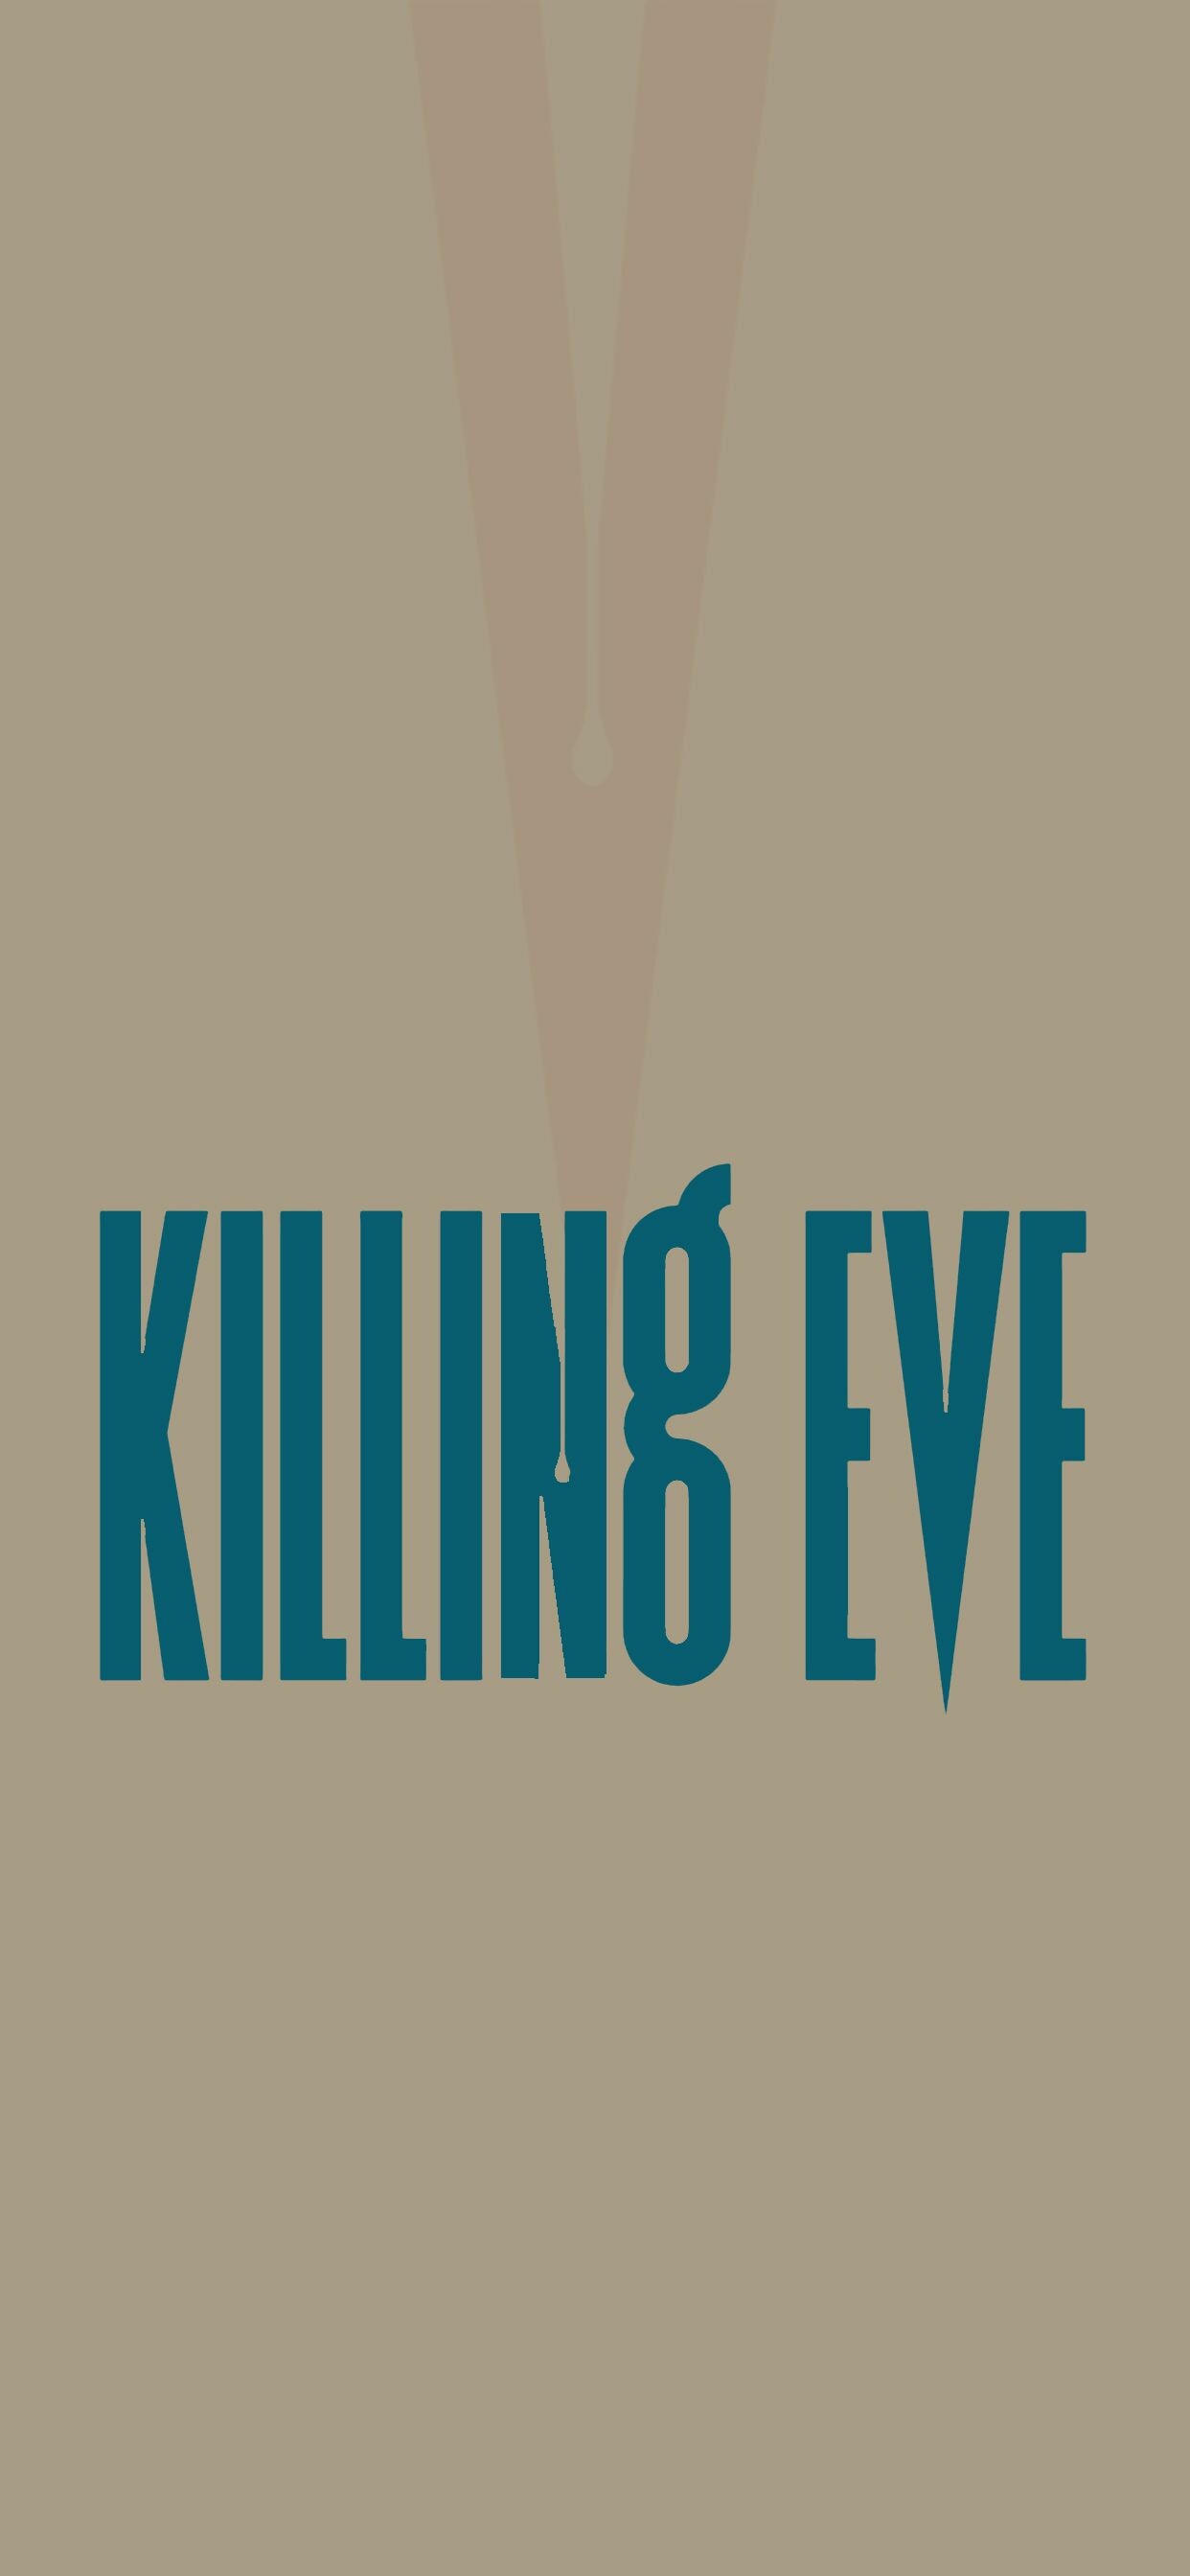 Killing Eve: The first season had Phoebe Waller-Bridge as the head writer. 1250x2690 HD Background.